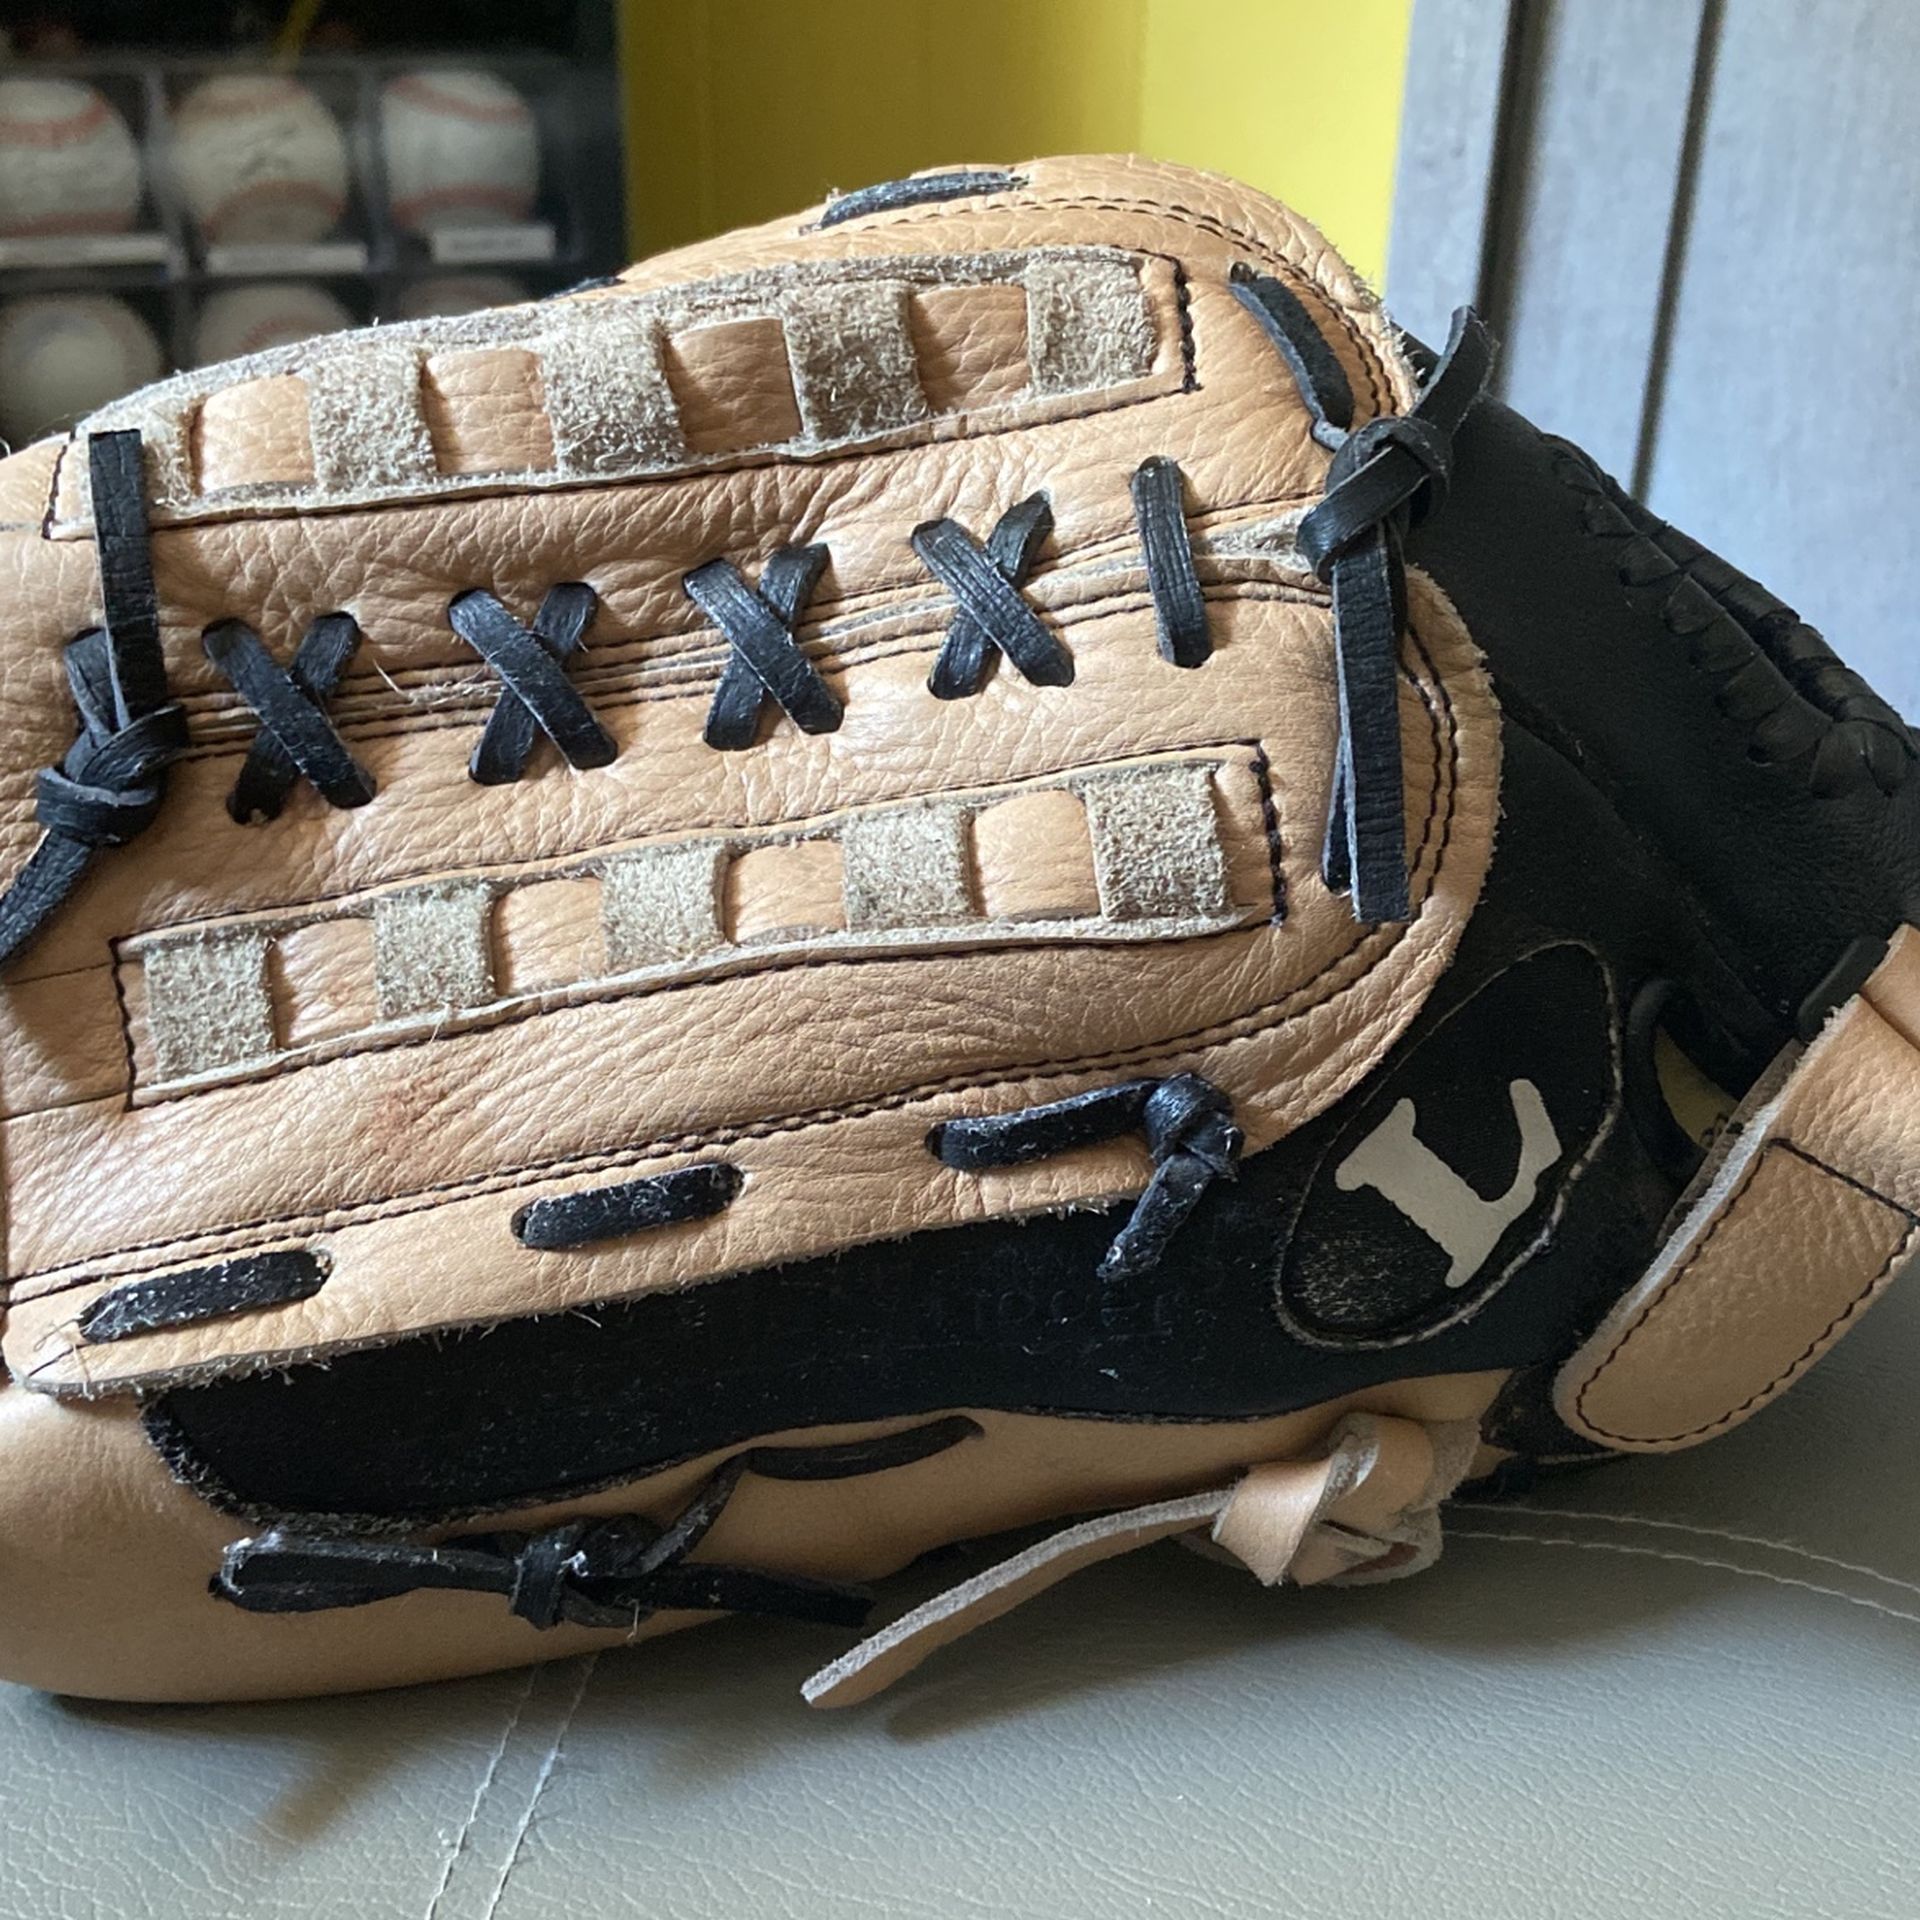 Louisville Slugger Dynasty 13.5” LHT Softball Glove